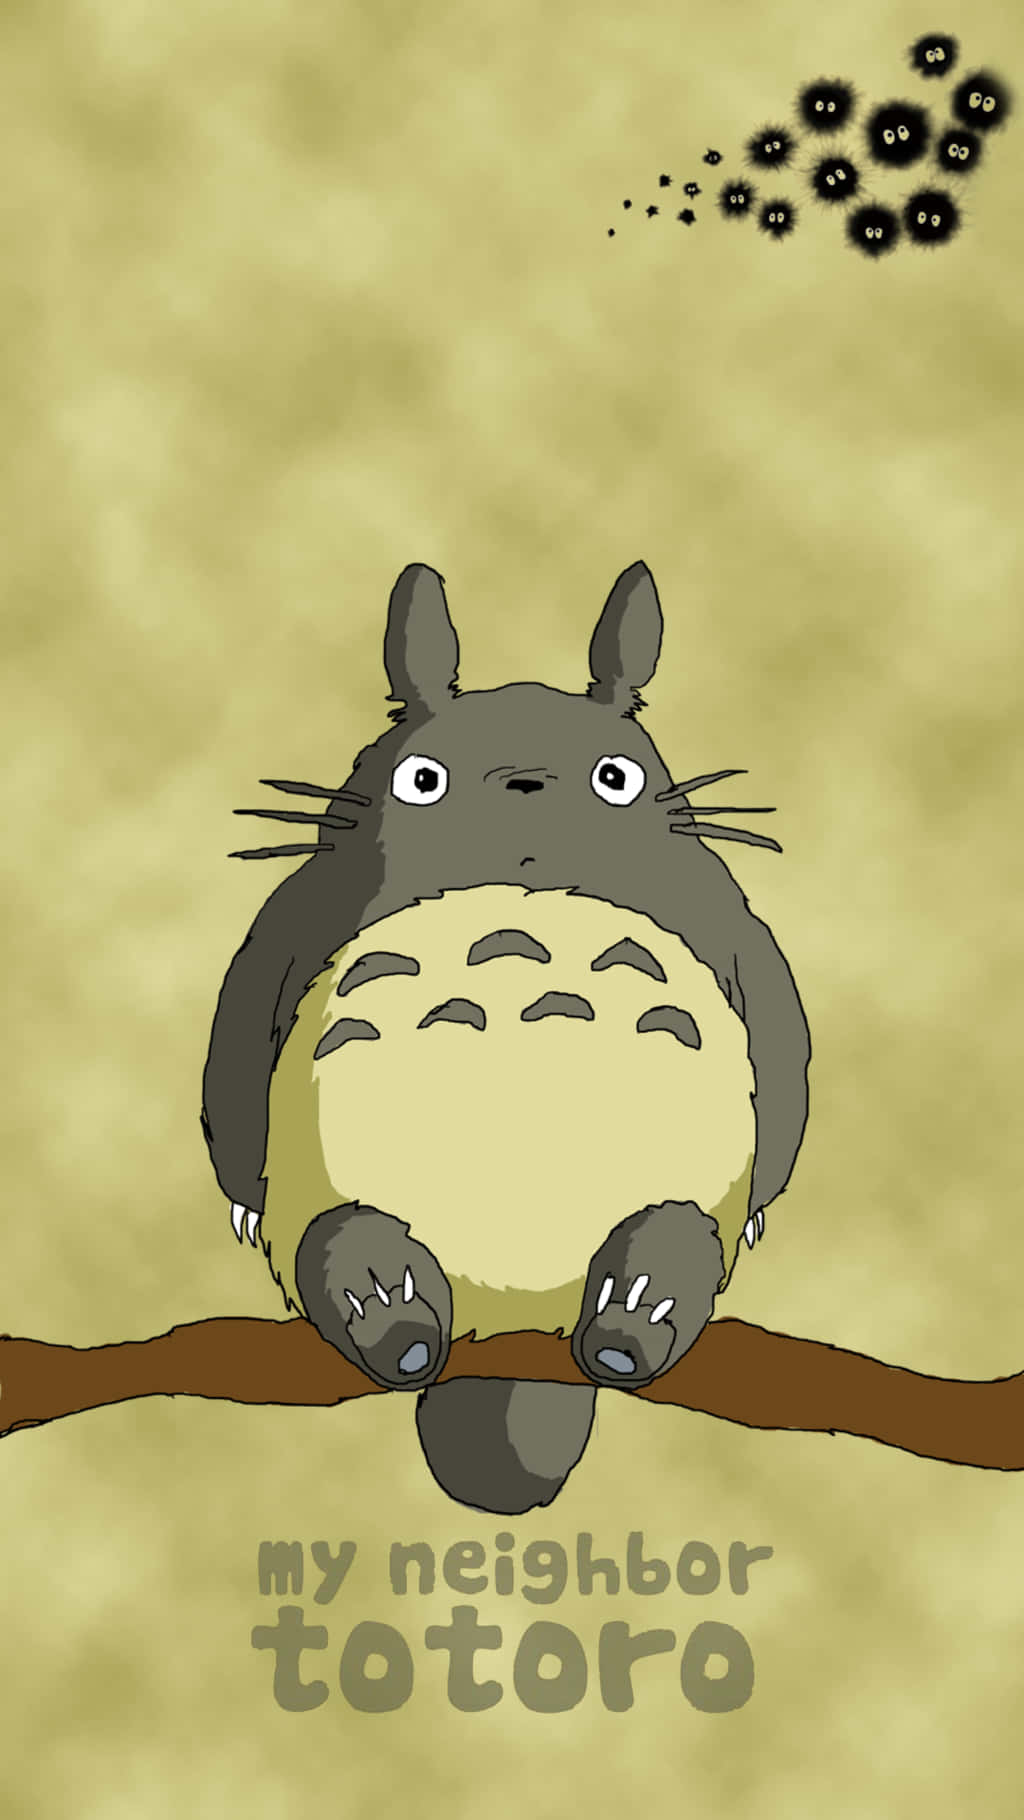 Enjoying the Magical World of Totoro